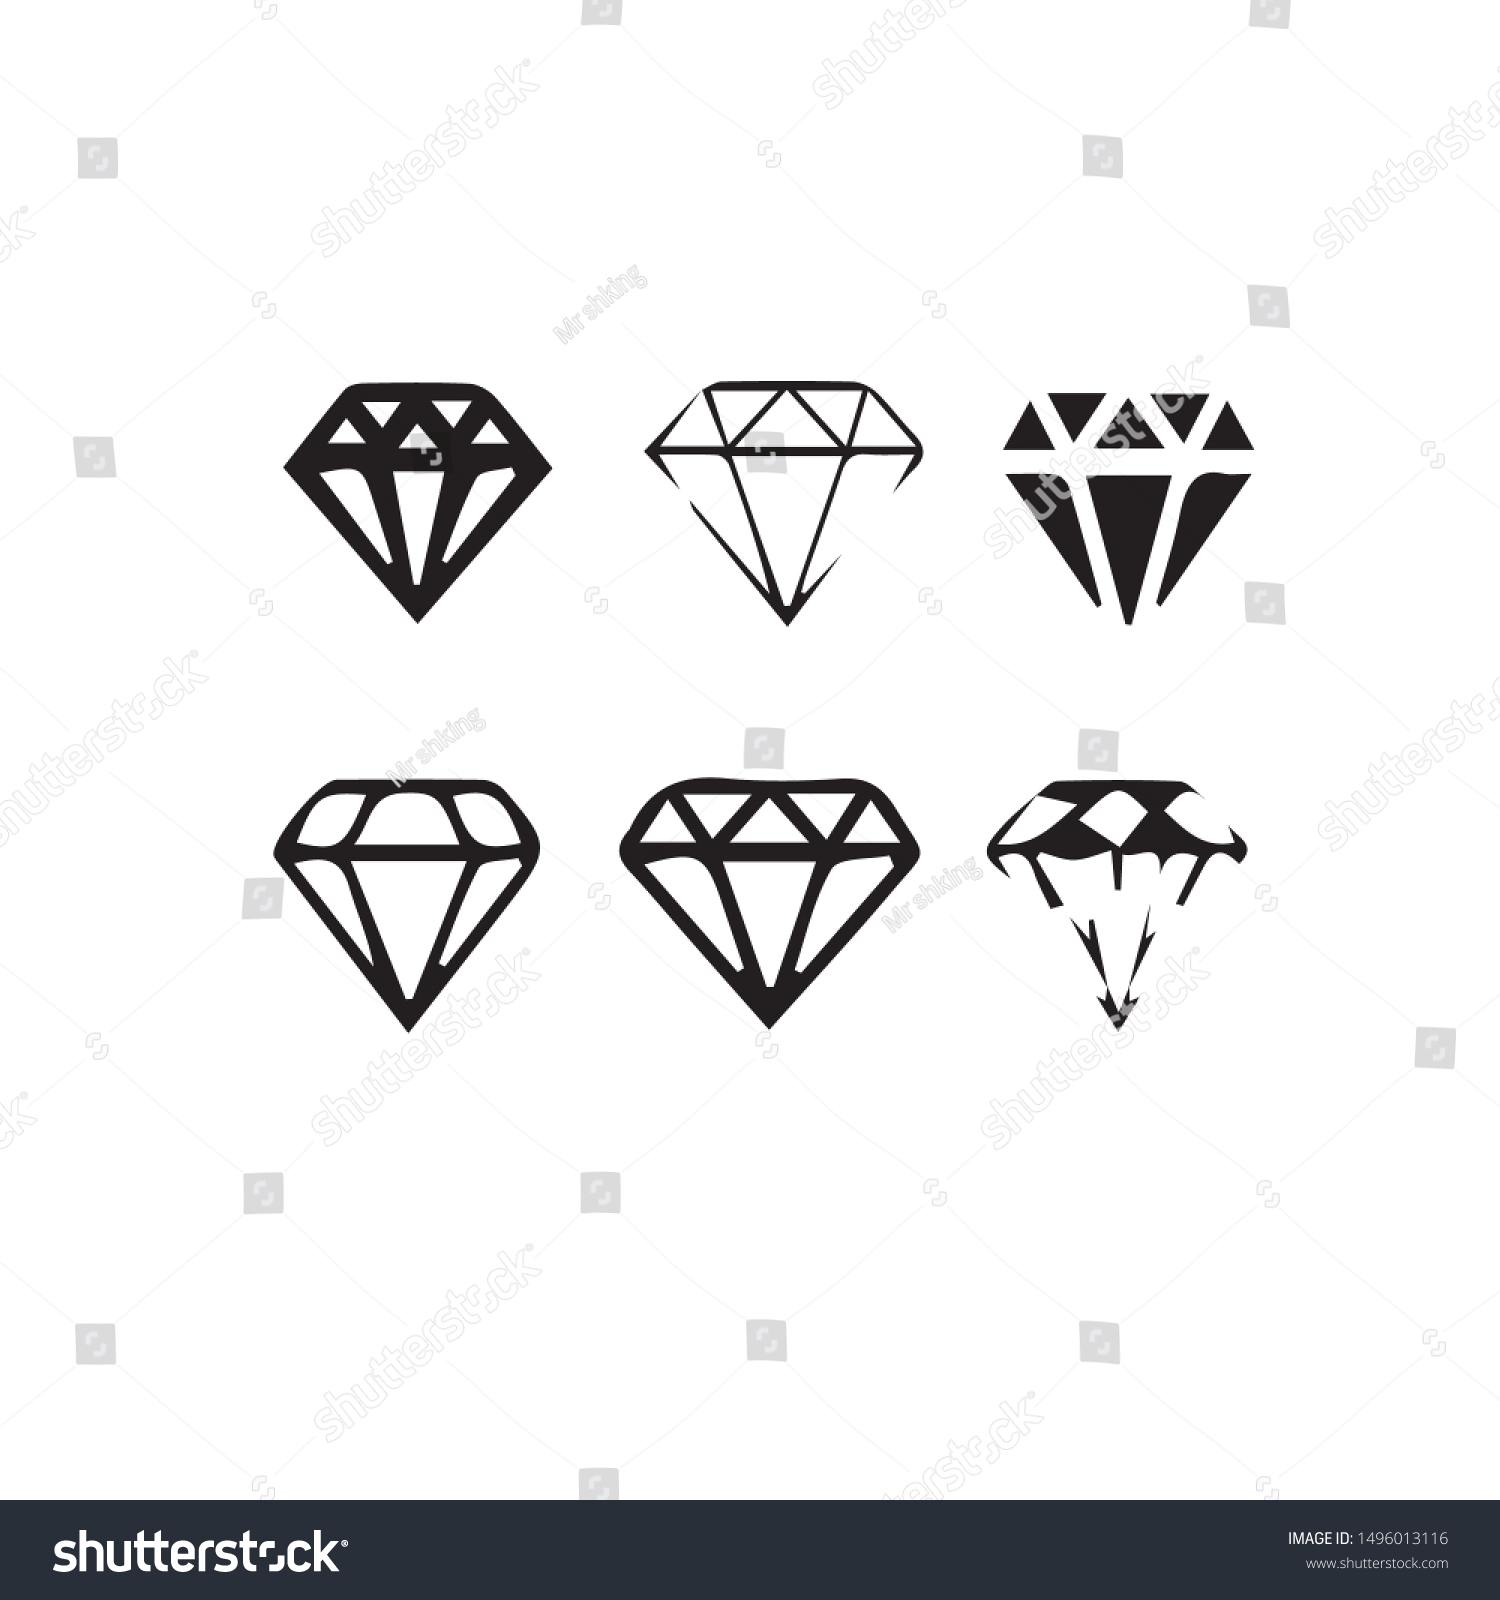 diamond vector free